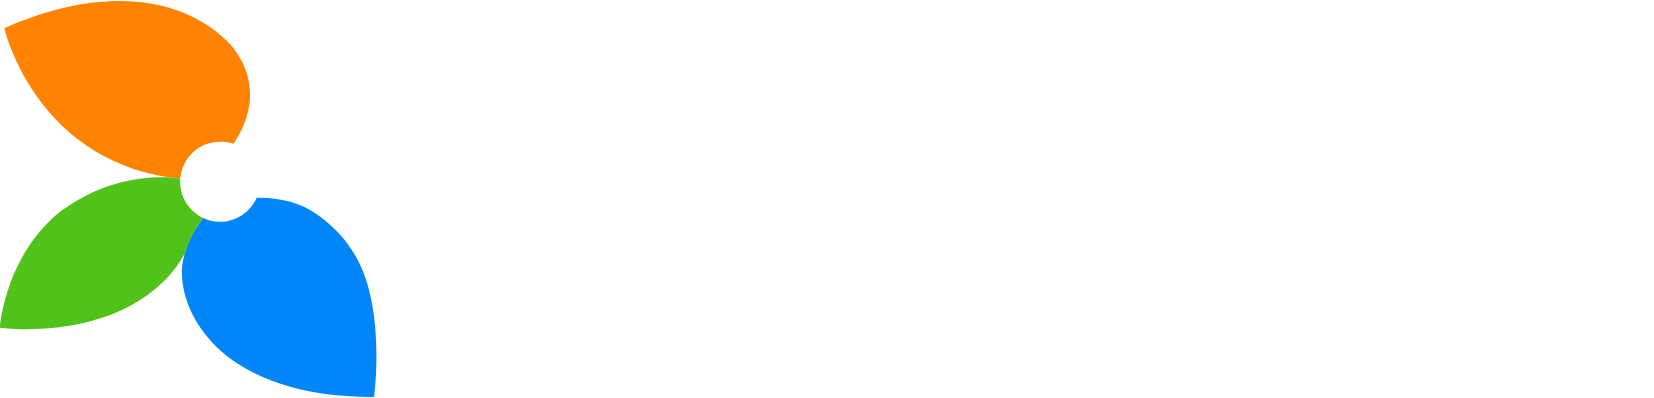 IDP Education logo large for dark backgrounds (transparent PNG)